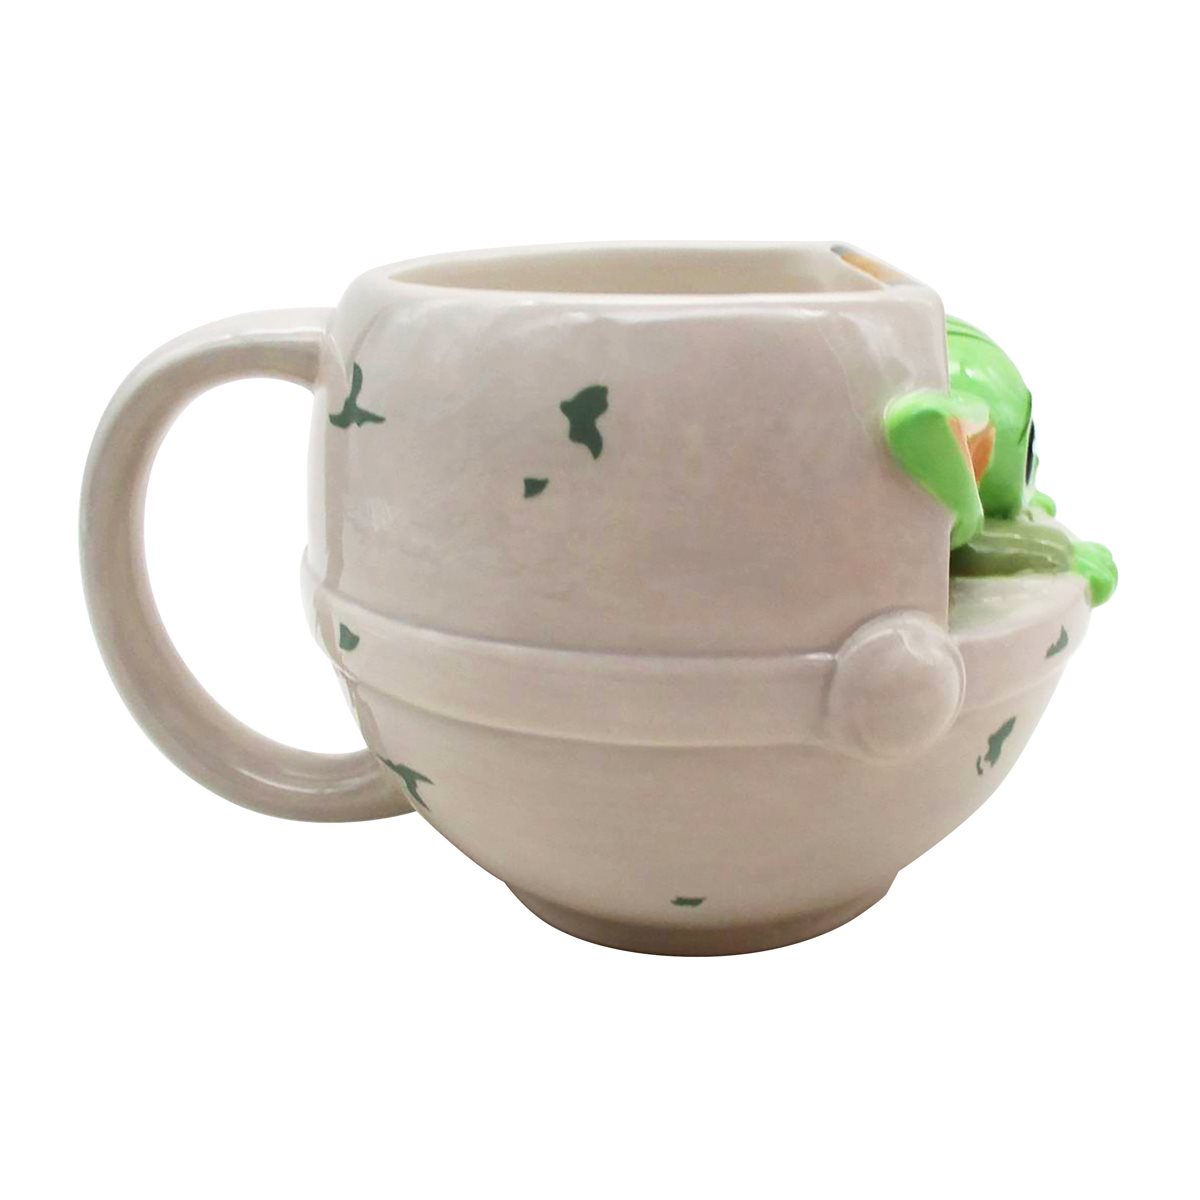 Star Wars: Mandalorian The Child 20 Ounce Ceramic Mug